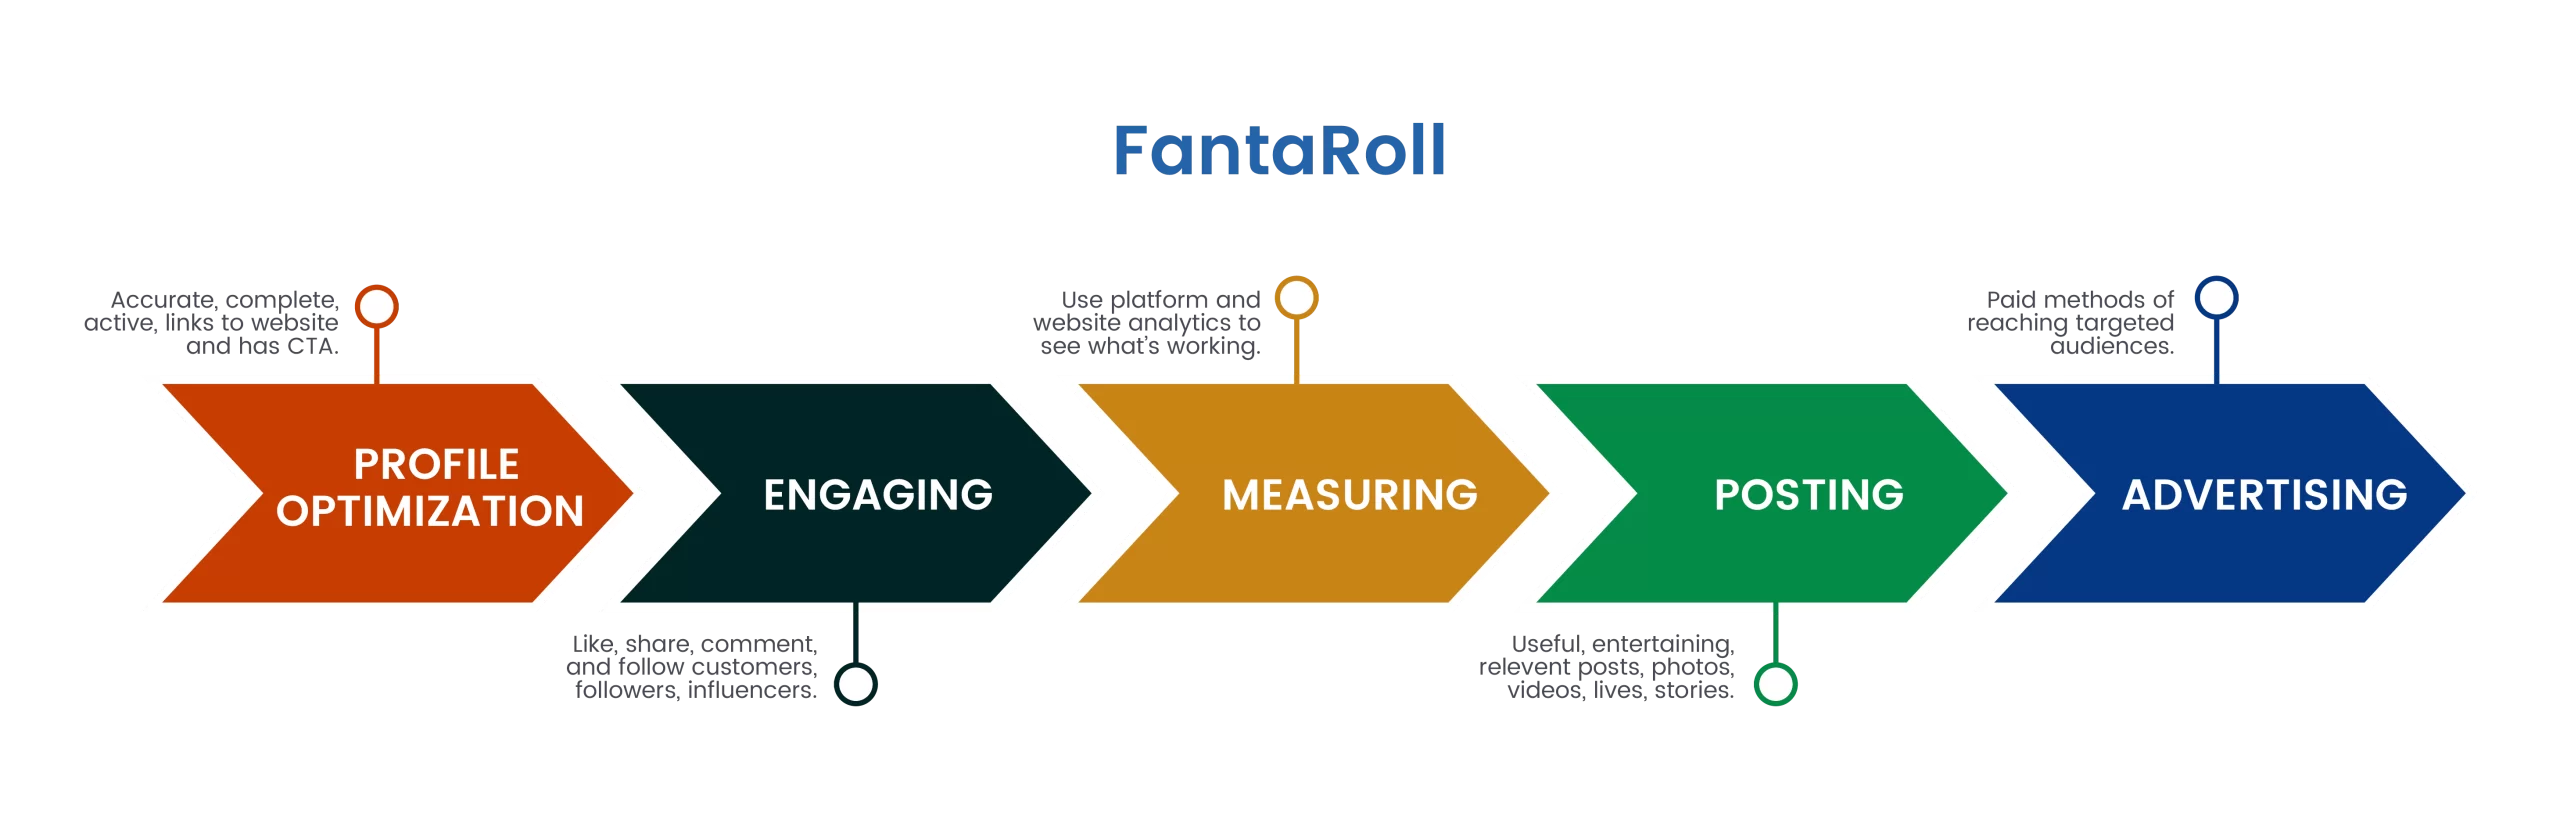 FantaRoll Marketing Strategy